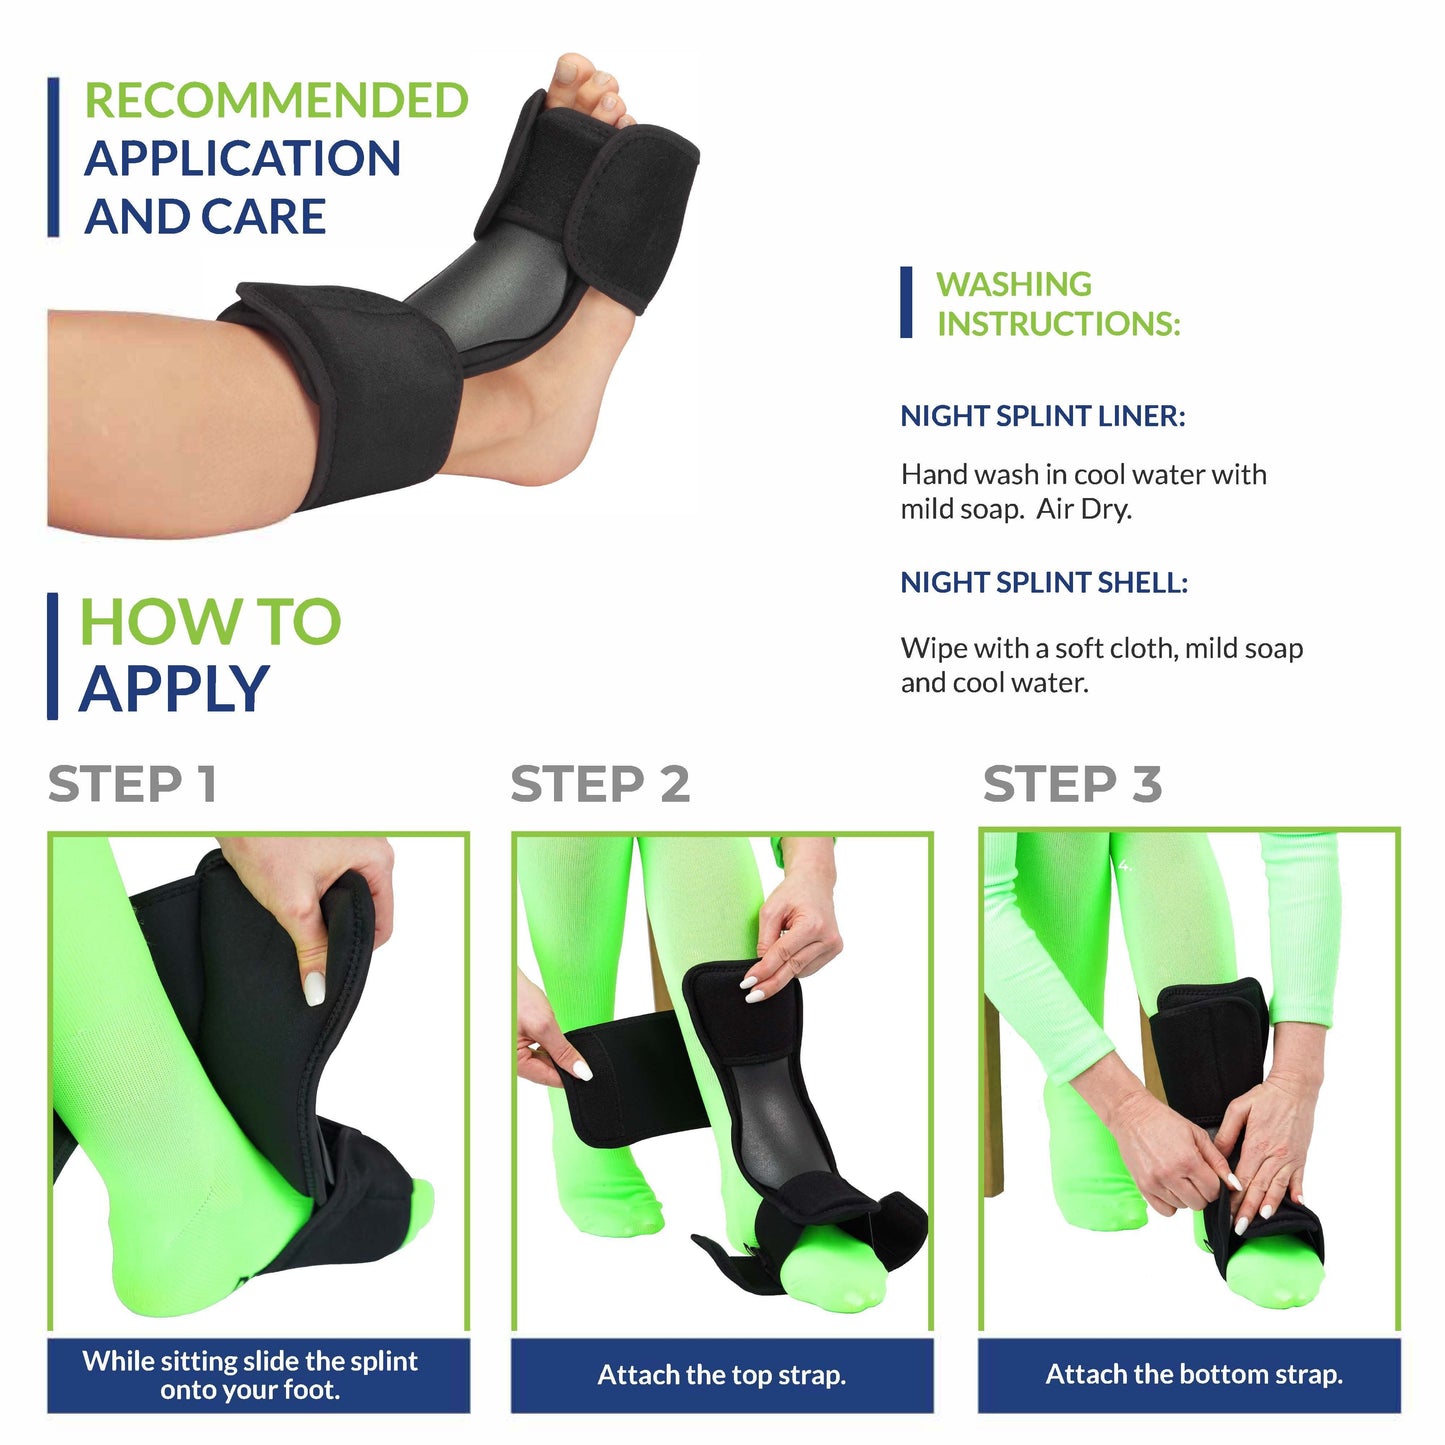 Brace Align Lightweight Adjustable Air Wrap for Plantar Fasciitis Achilles  Tendonitis Heel Spurs and Heel Pain